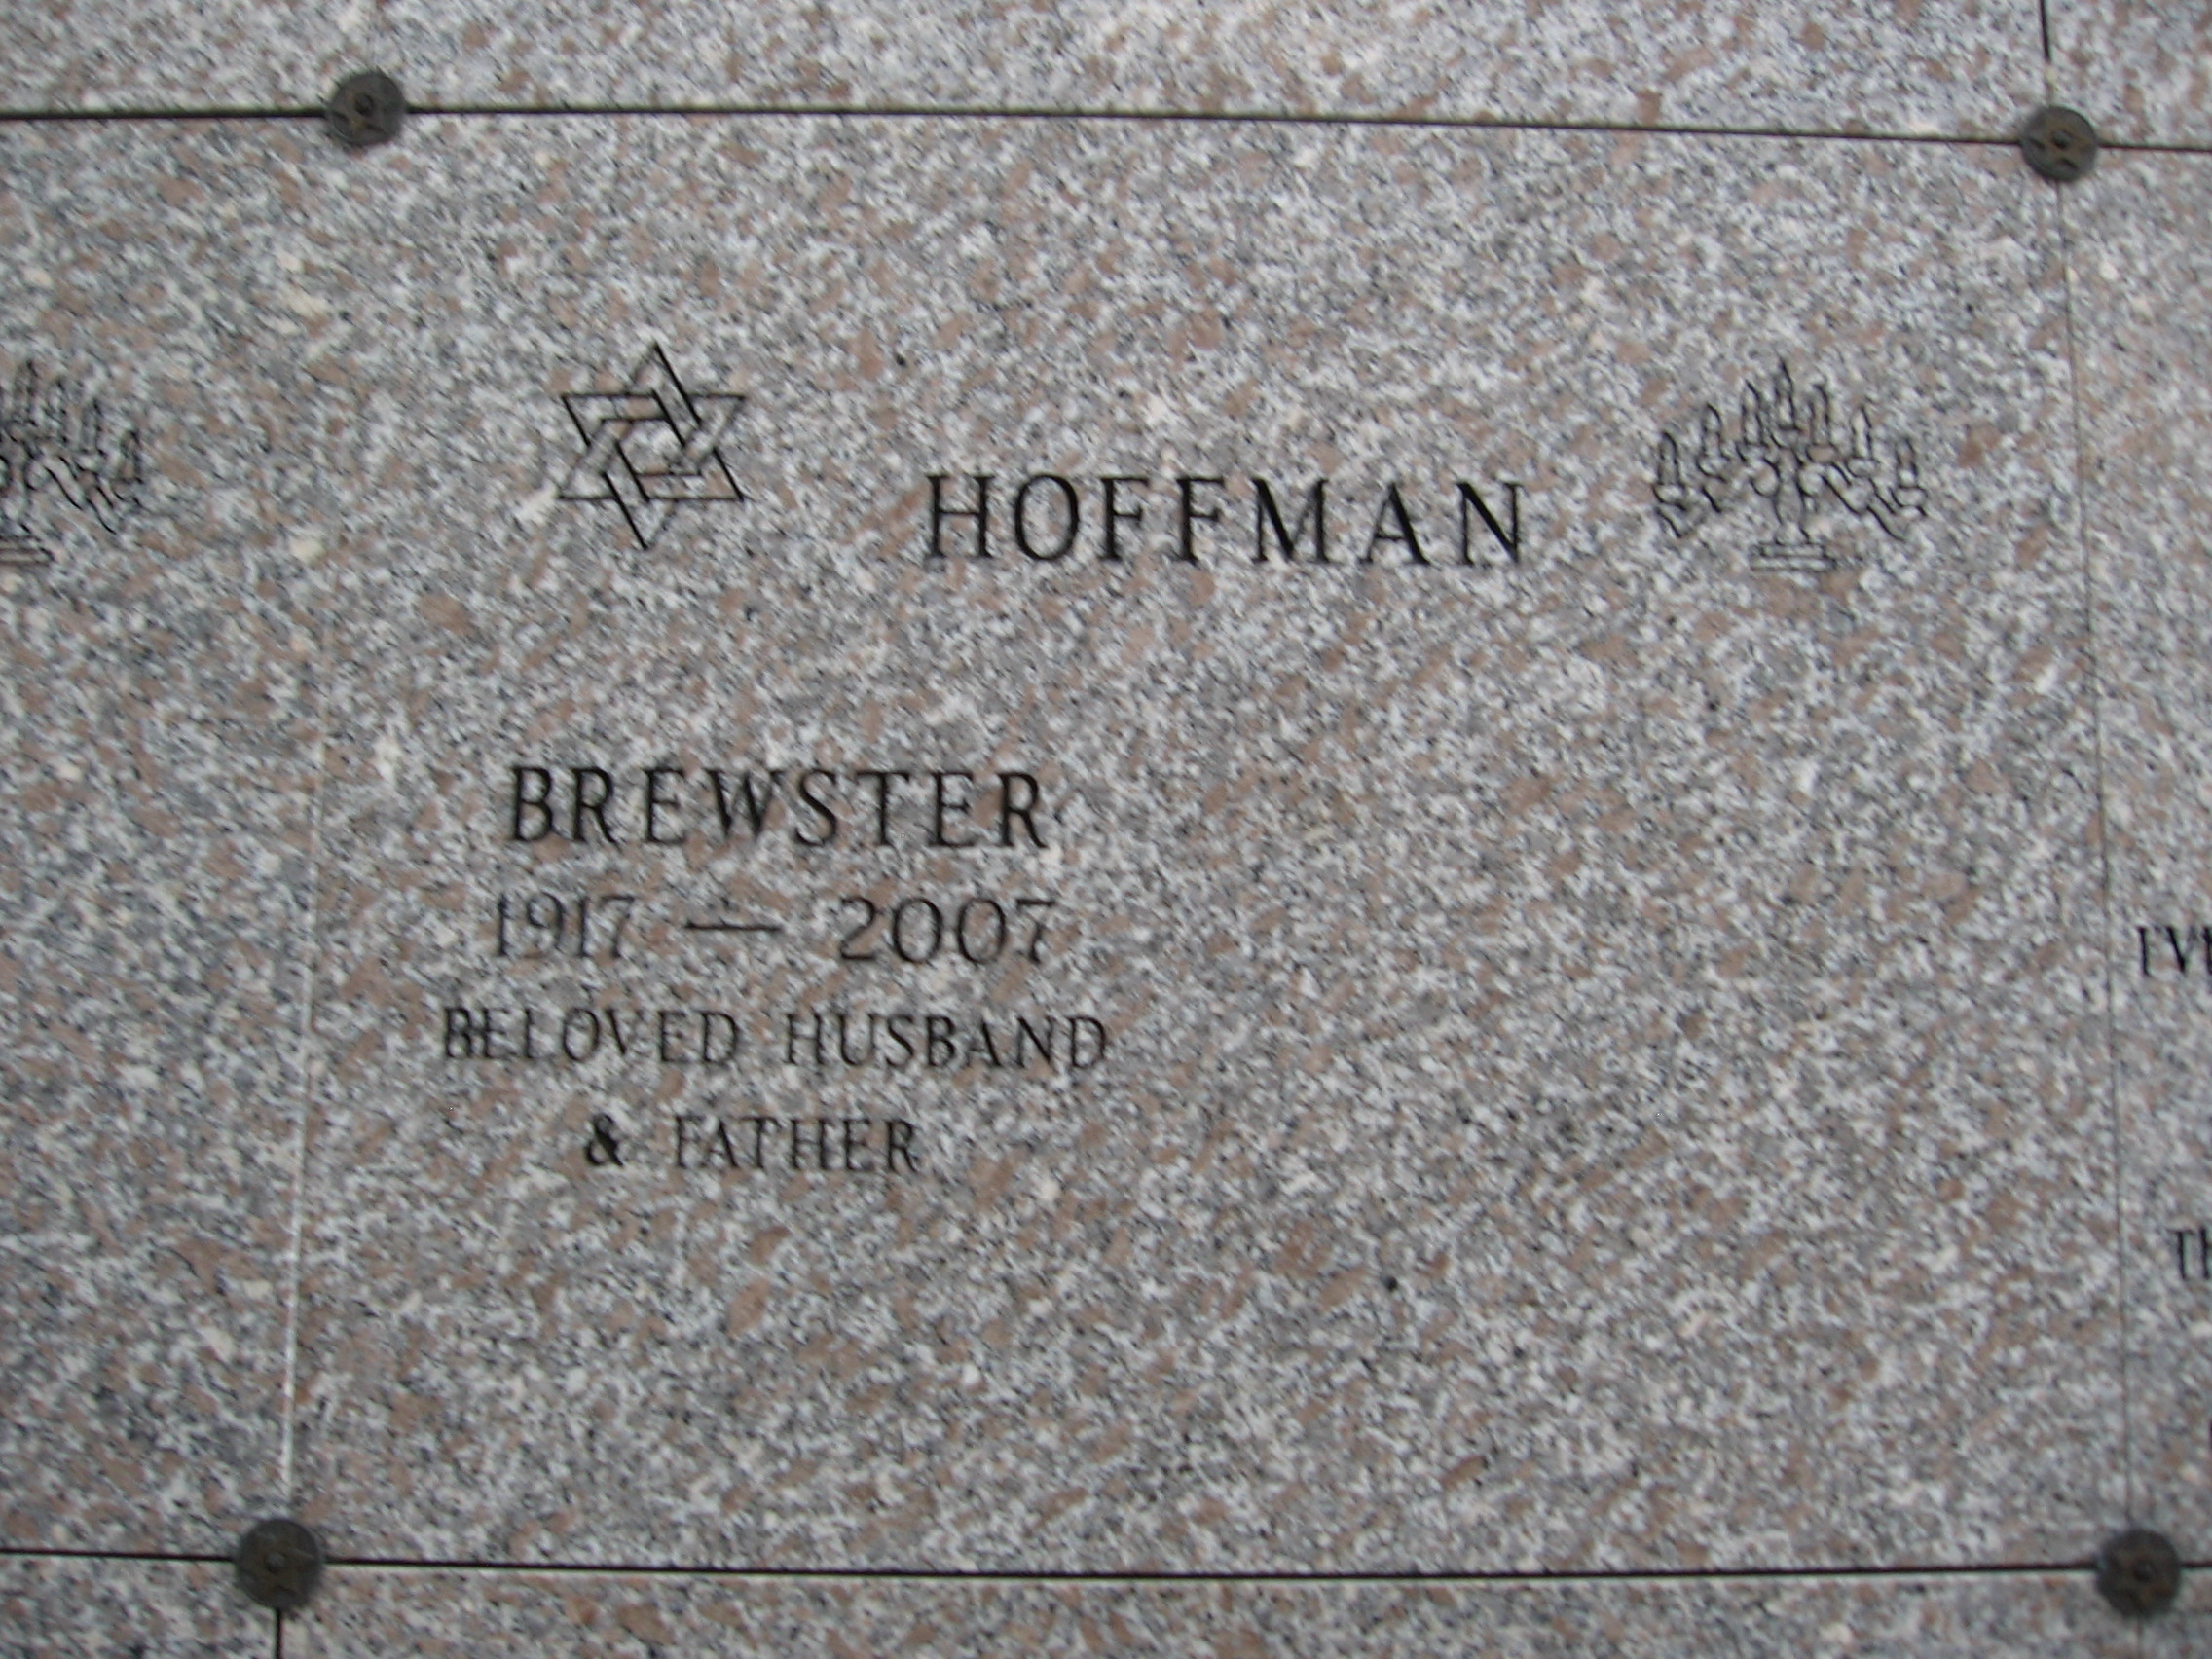 Brewster Hoffman